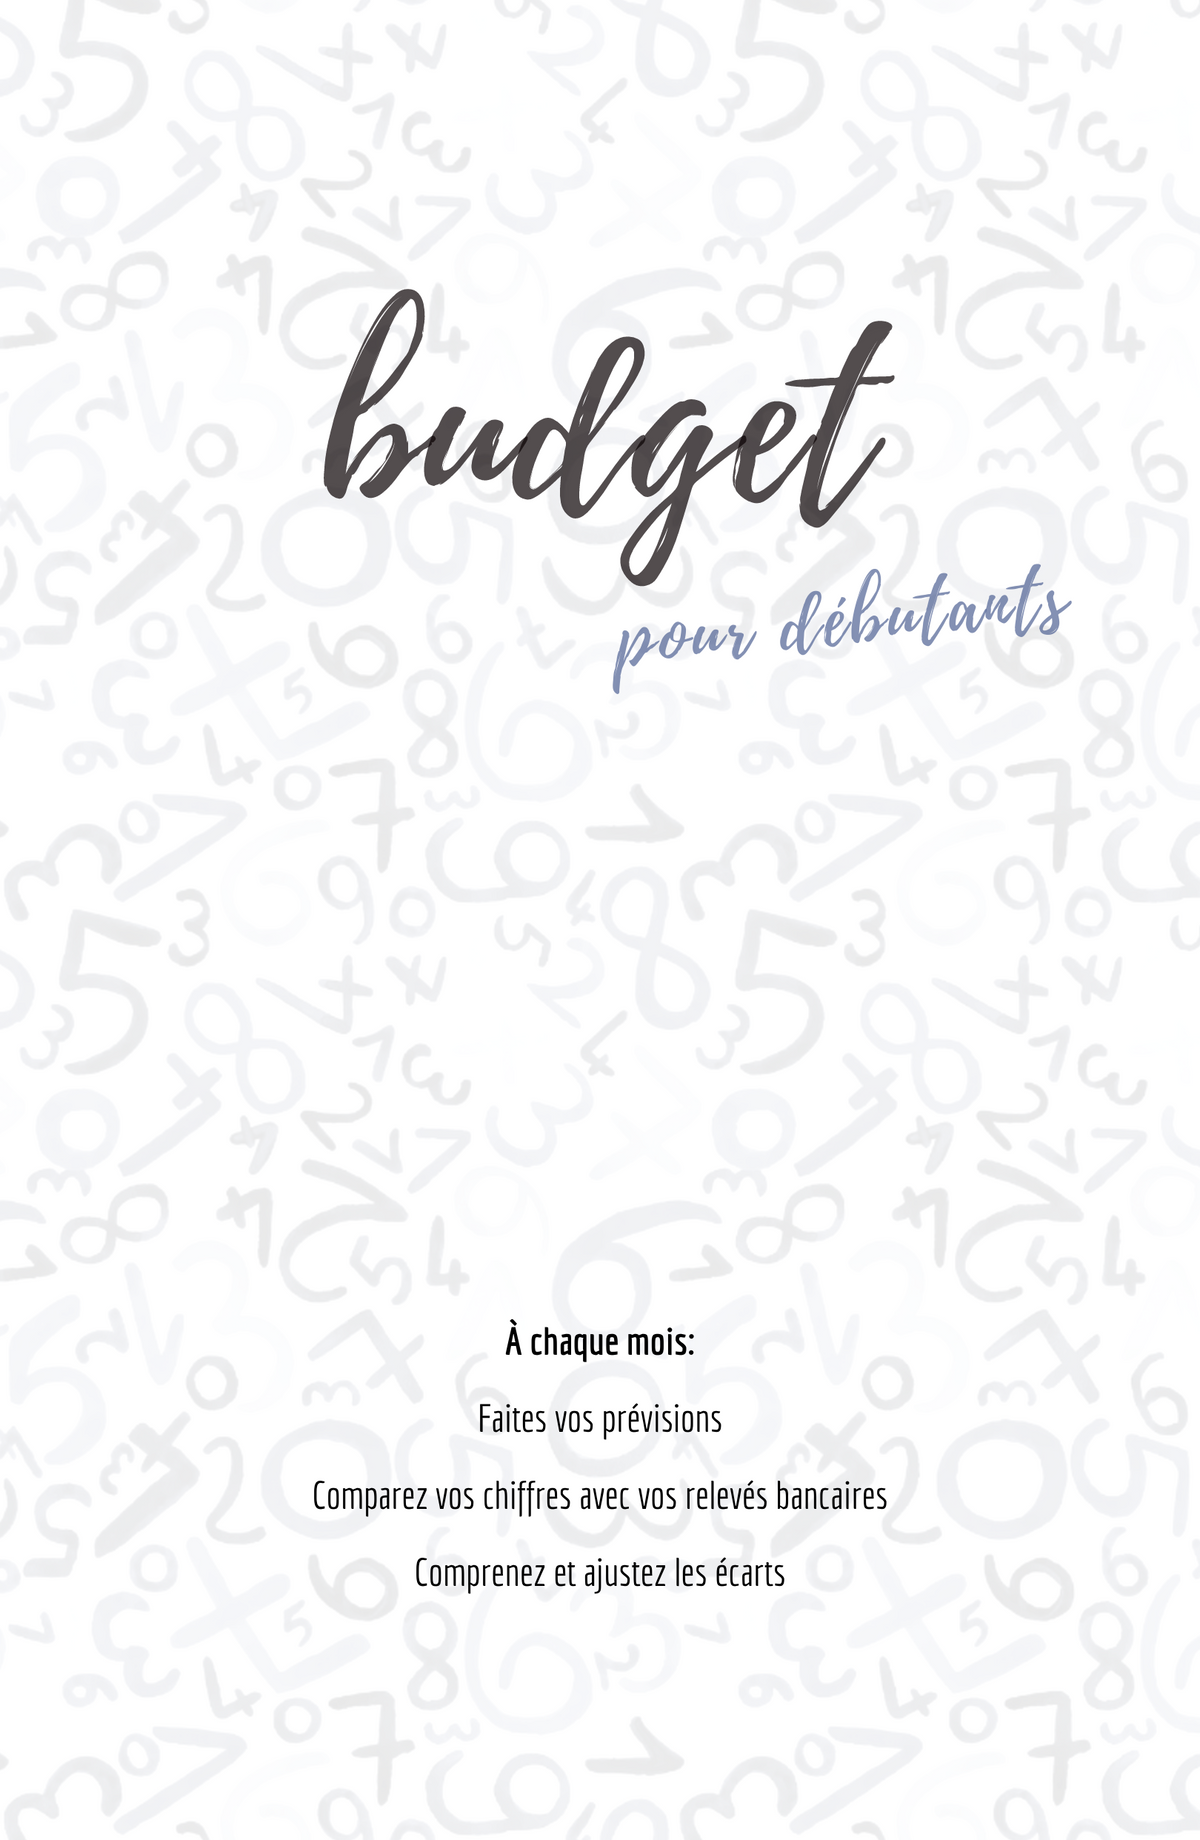 Agenda &amp; budget #72